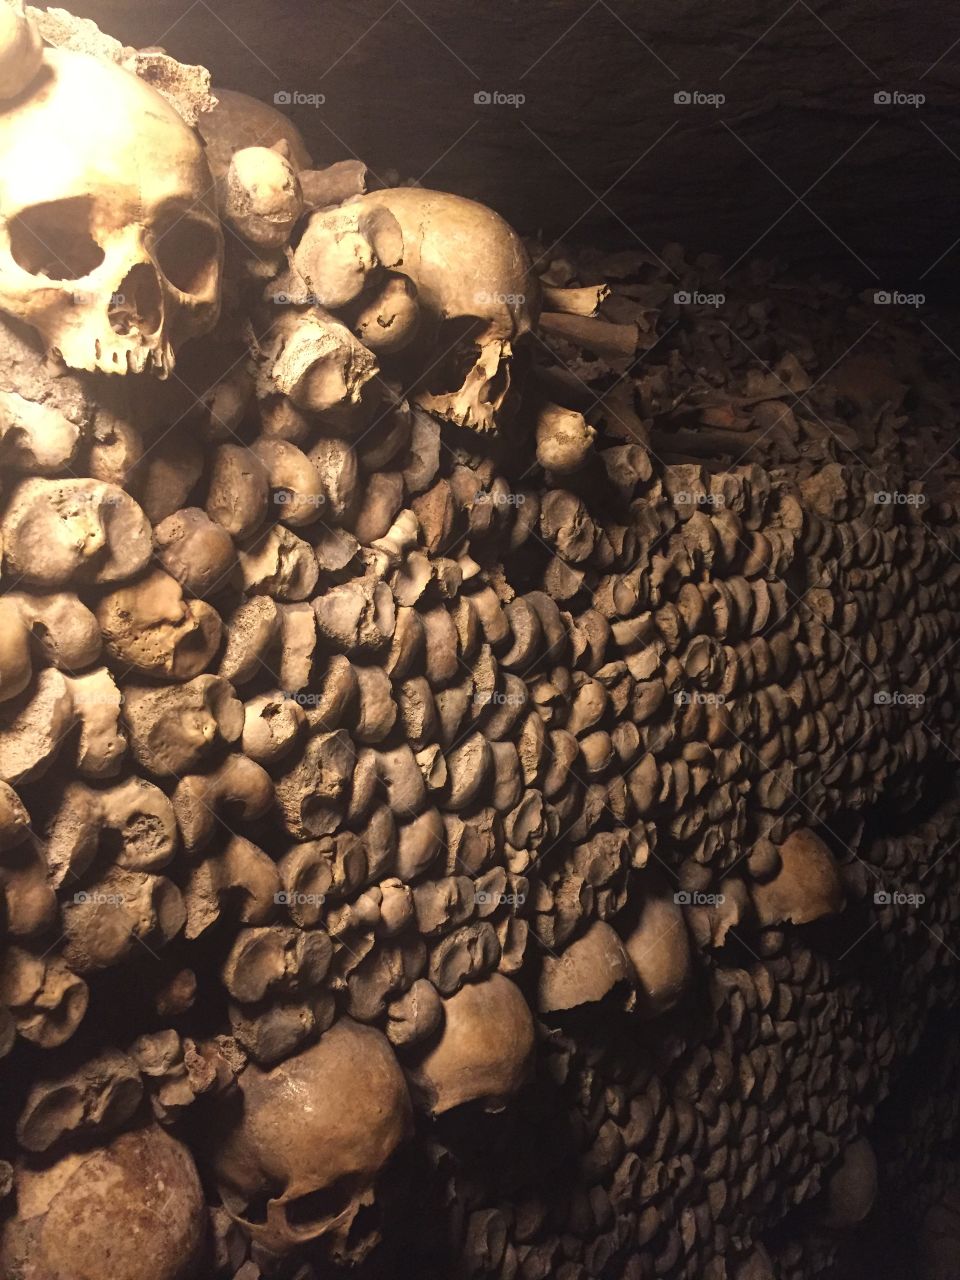 Catacombs 